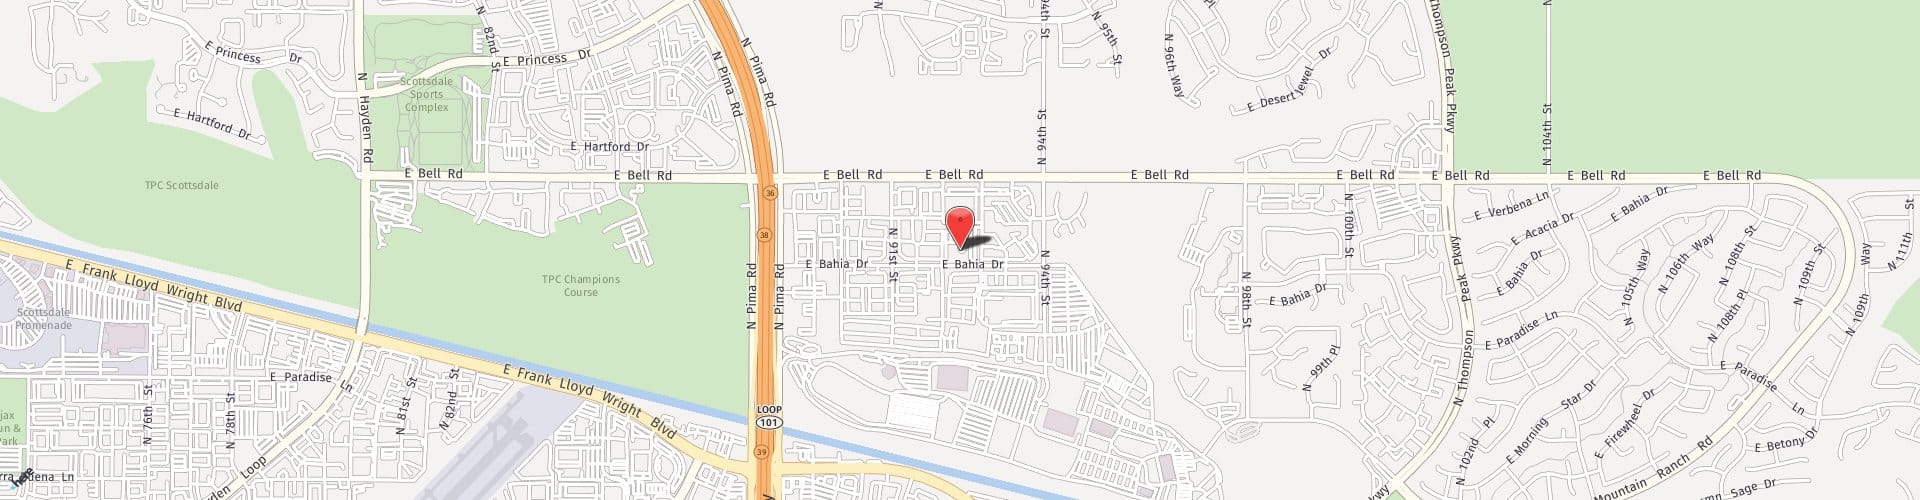 Location Map: 9377 E. Bell Rd. Scottsdale, AZ 85260